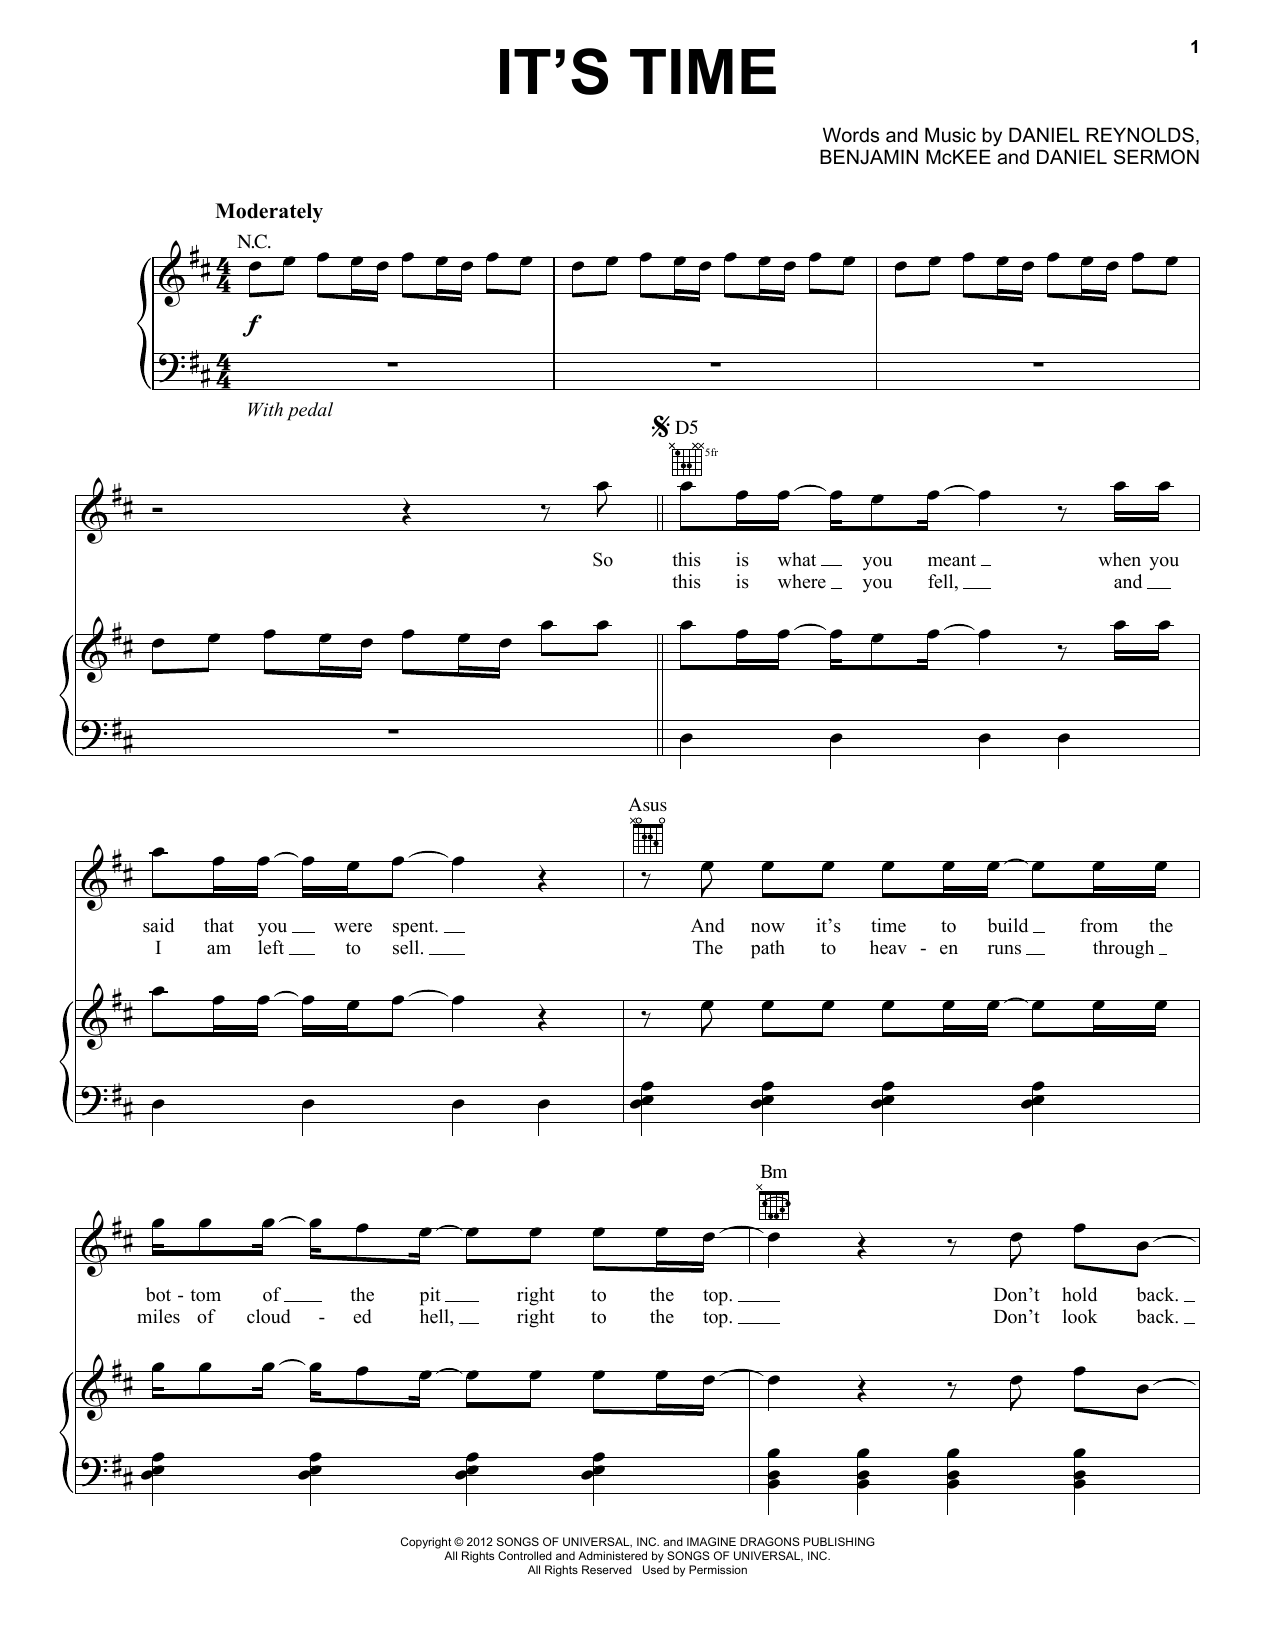 Imagine Dragons It's Time Sheet Music Notes & Chords for Ukulele - Download or Print PDF